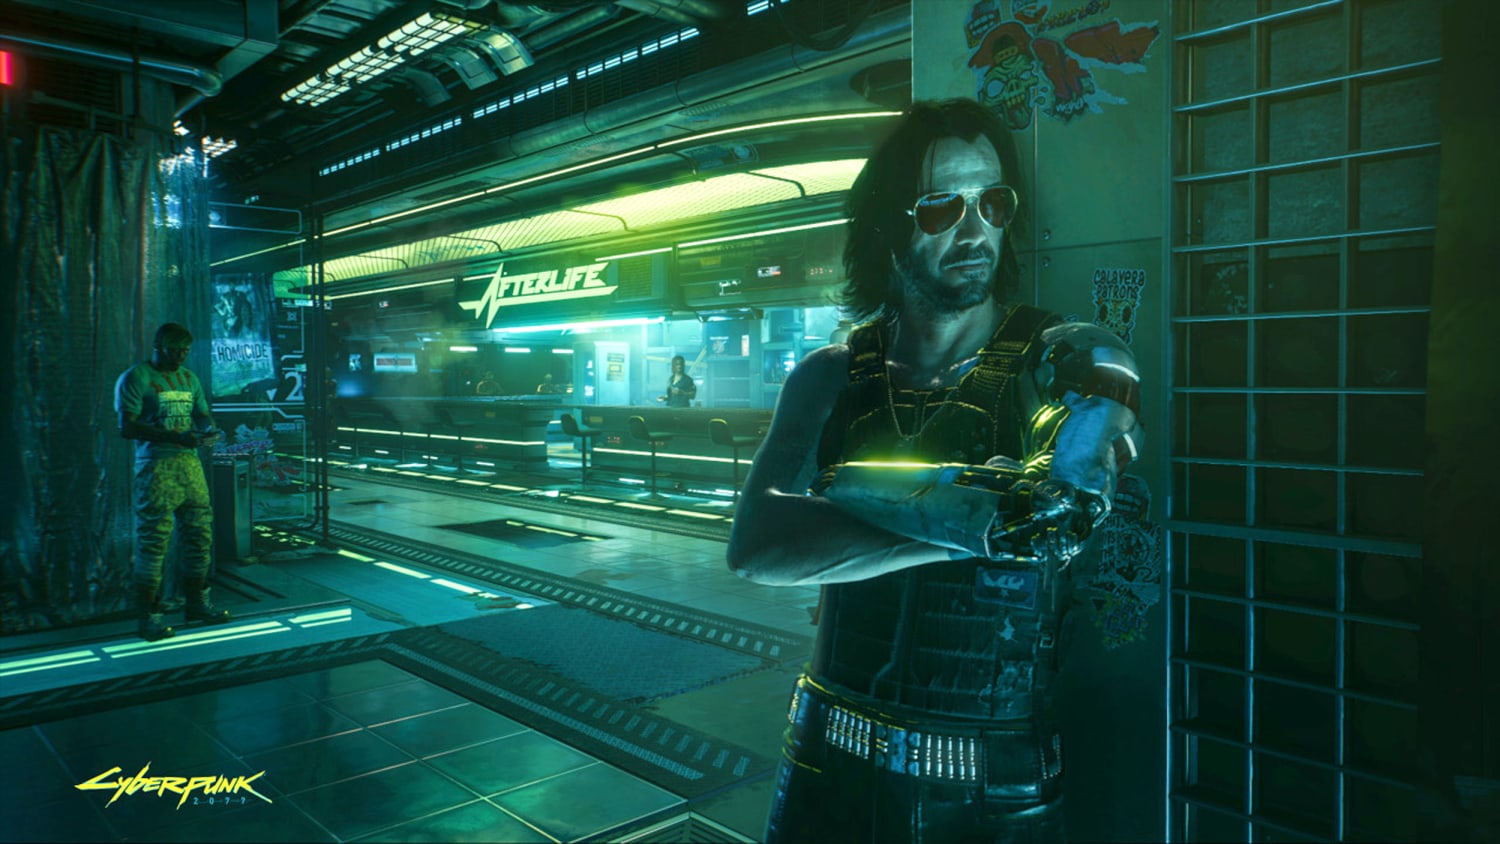 Investor sues video game studio over buggy 'Cyberpunk 2077'